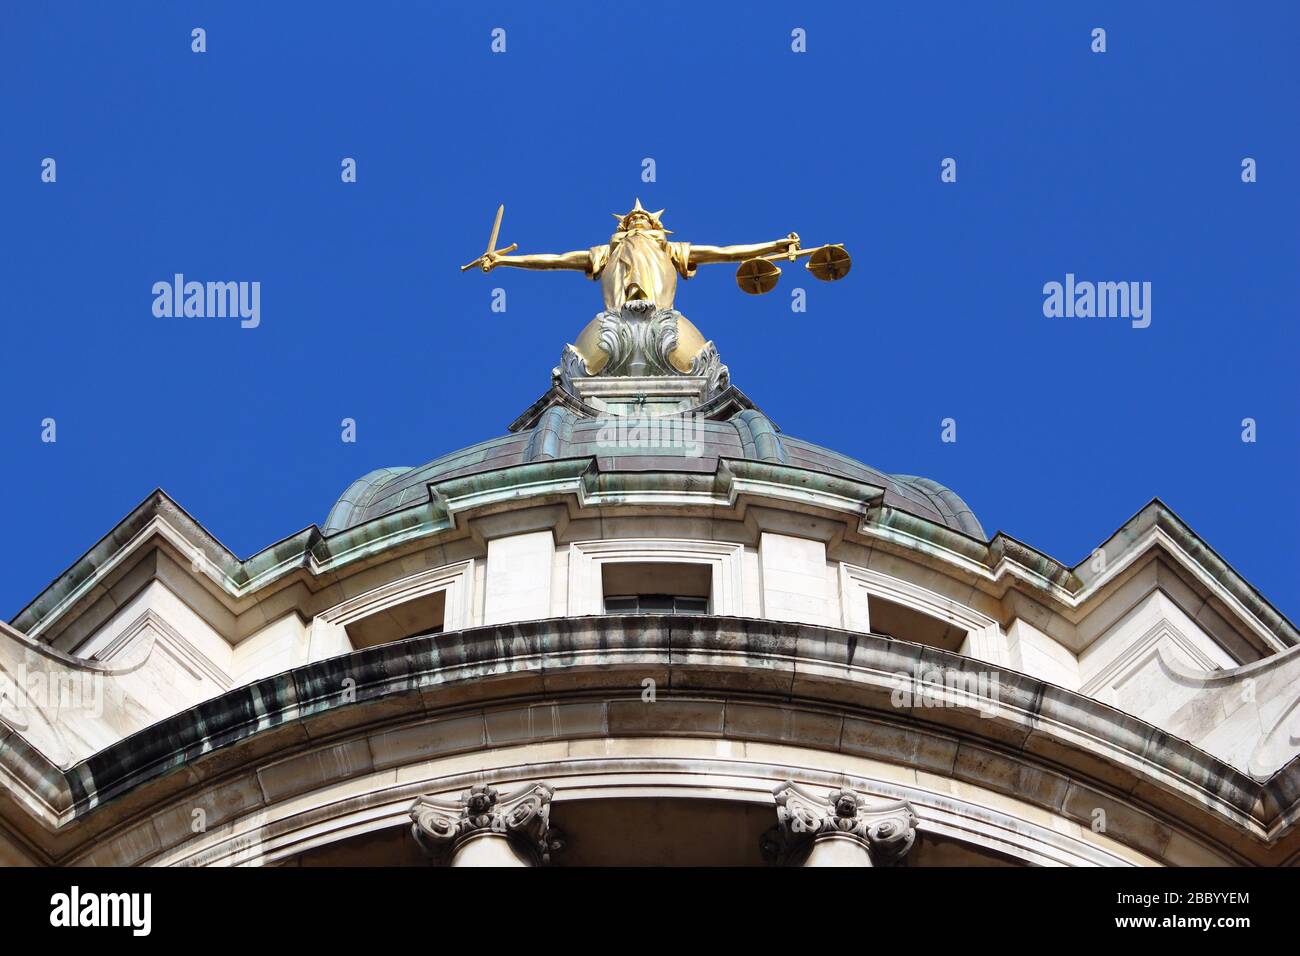 Old Bailey (Central Criminal Court). Landmark of London, UK. Stock Photo